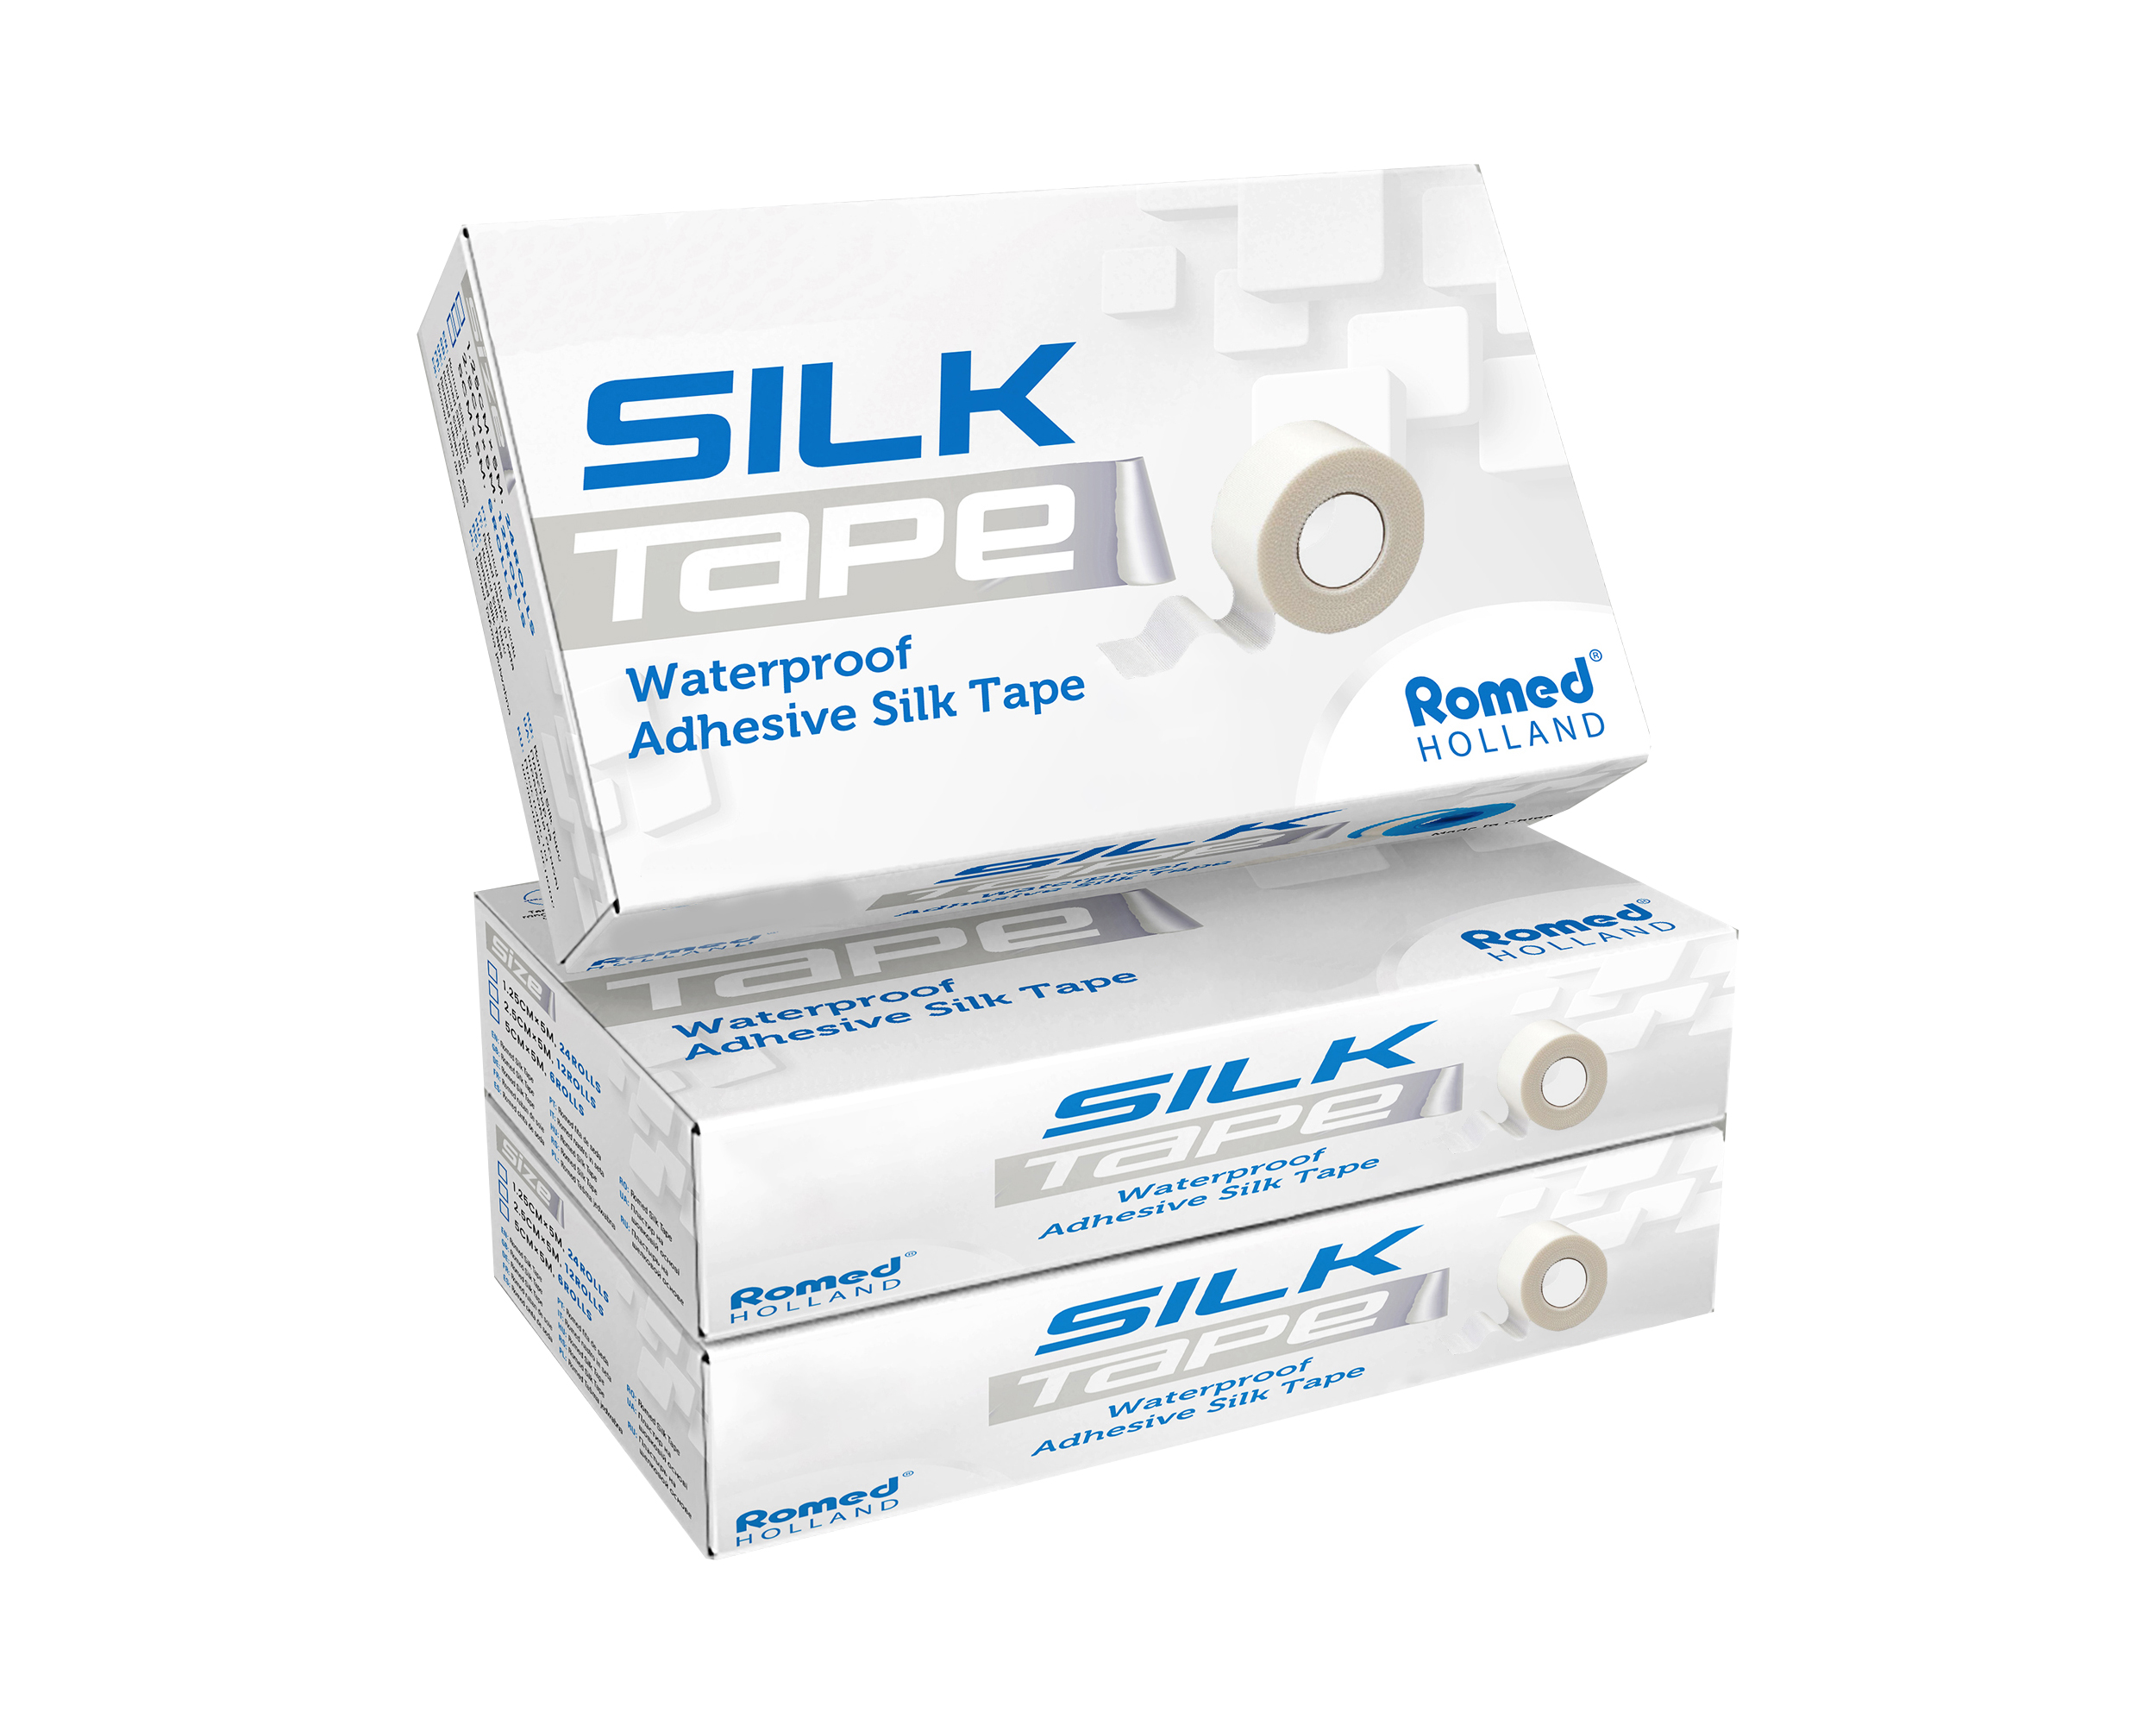 Adhesive Silk Tape